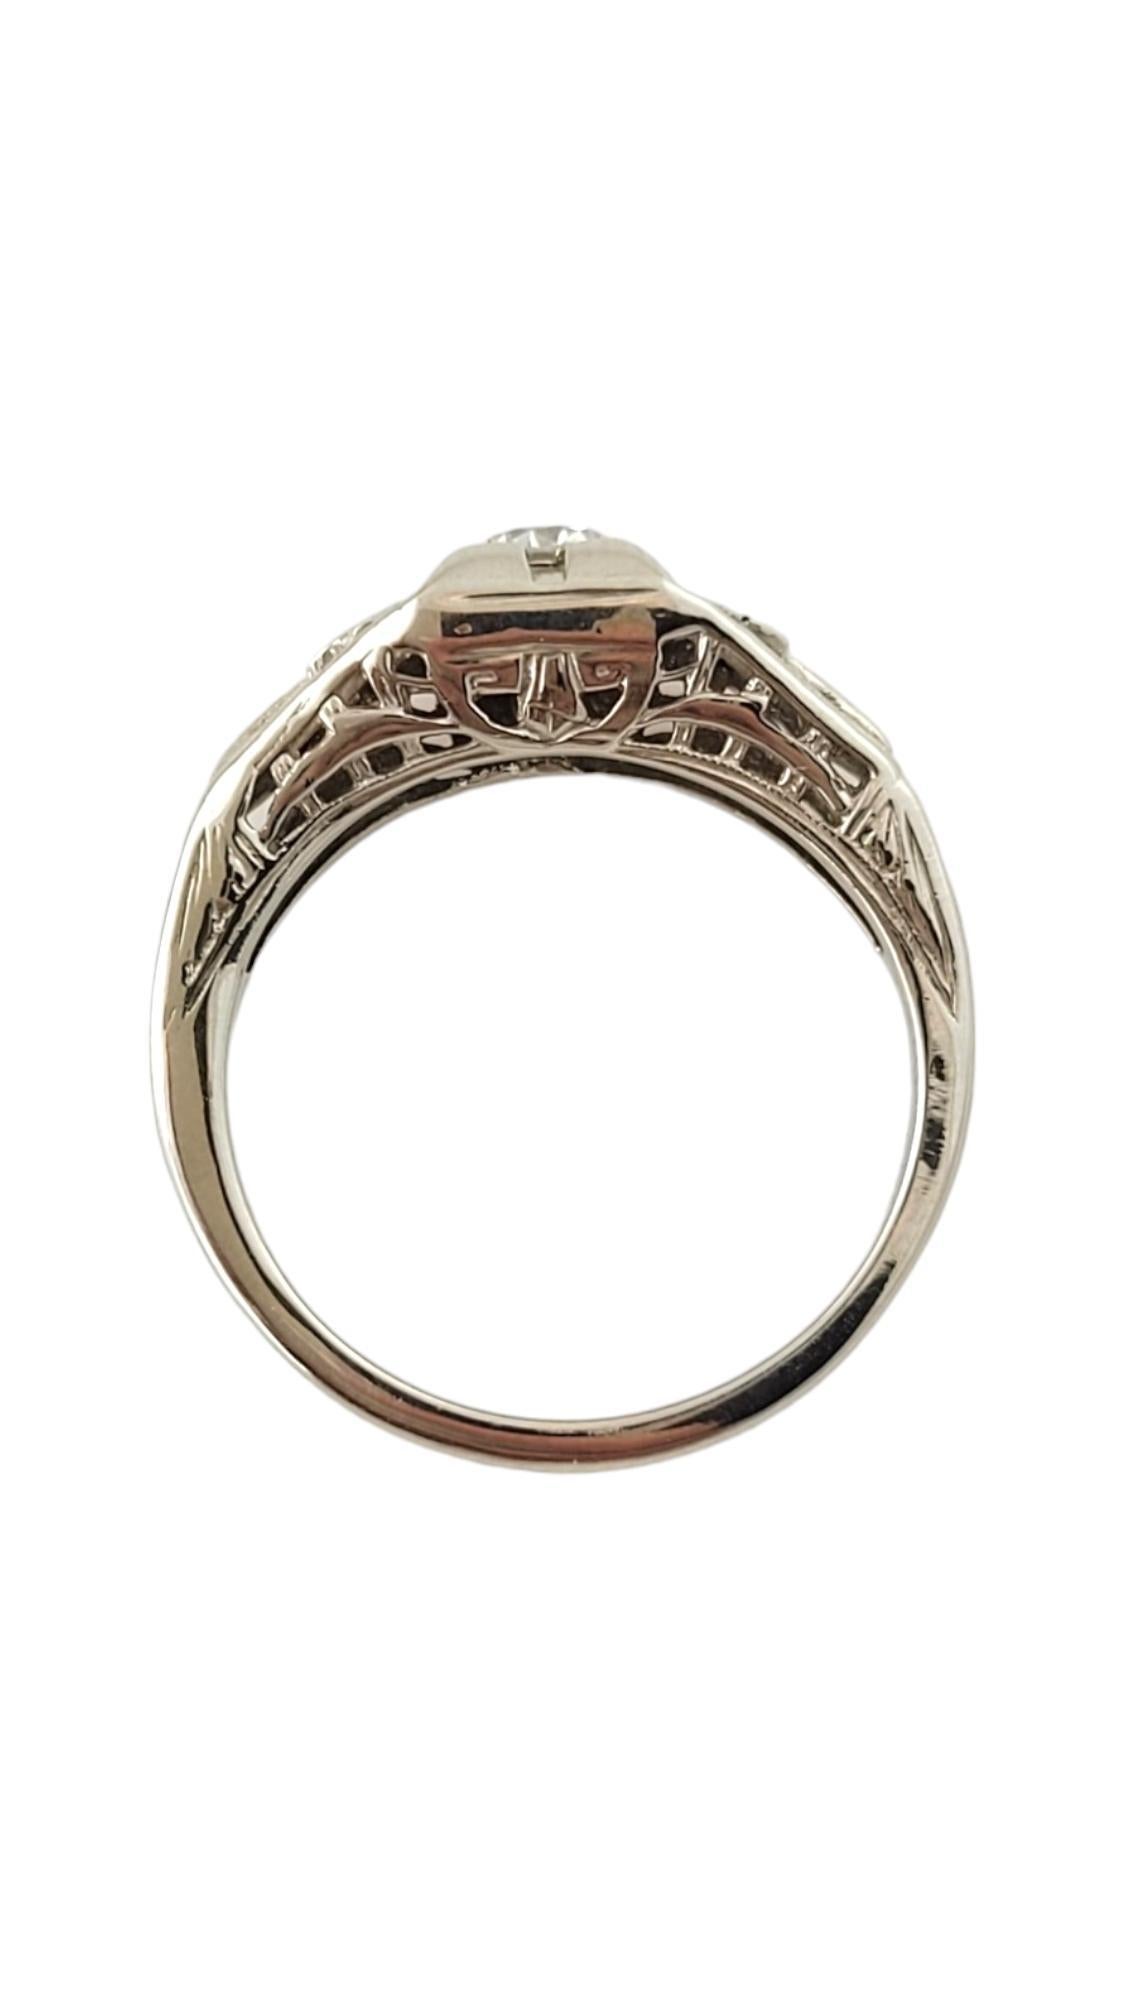 Brilliant Cut Vintage 14K White Gold Diamond Ring Size 4.75 #16930 For Sale